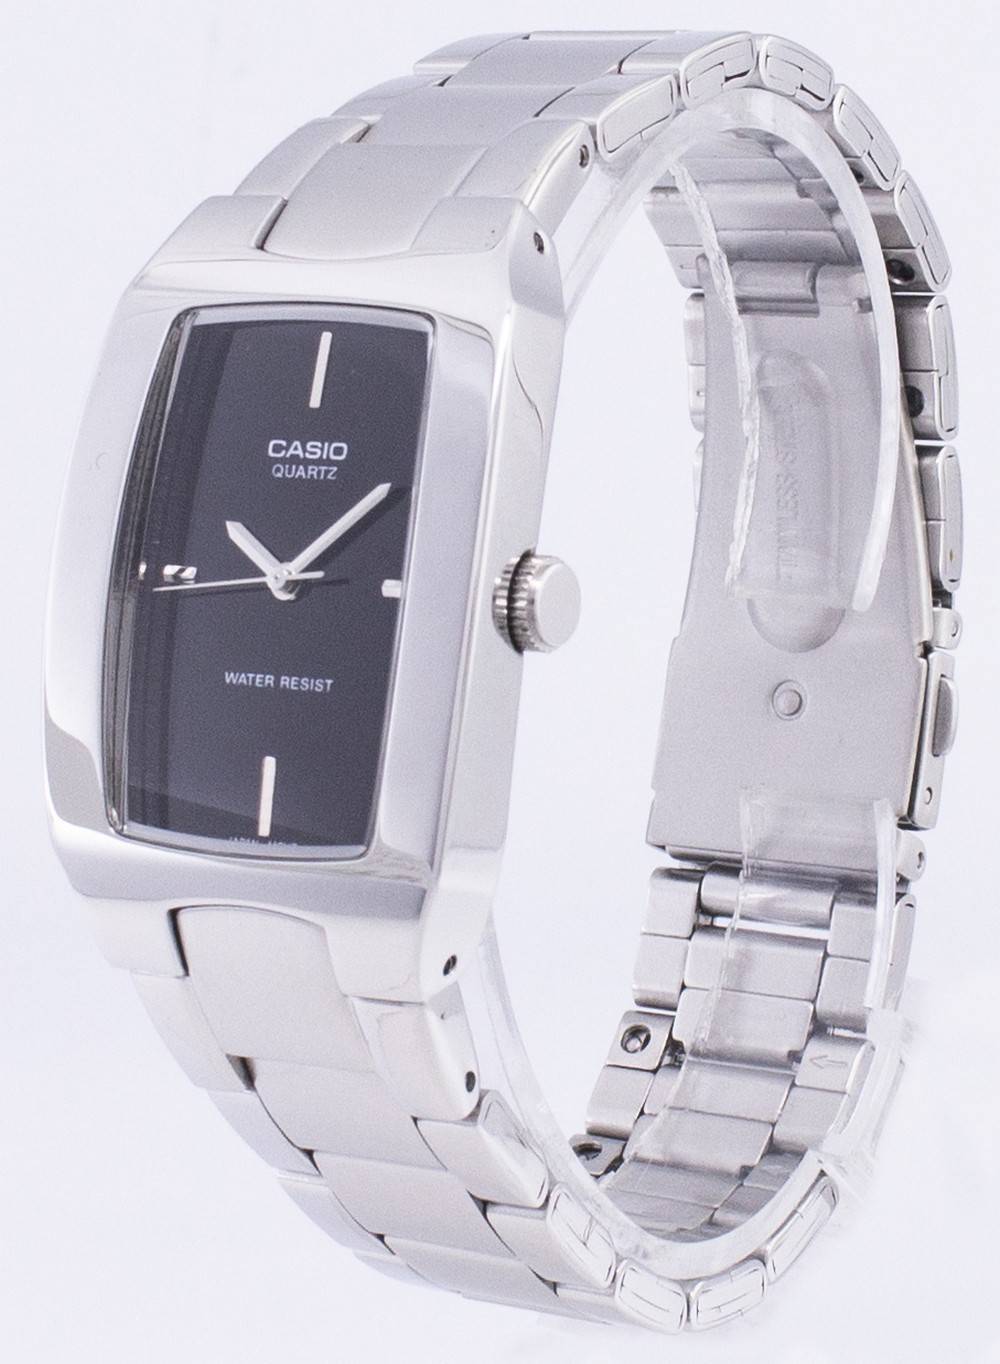 Casio Men's Quartz Watch Quartz Mineral Crystal MTP-1165A-1C - image 2 of 3